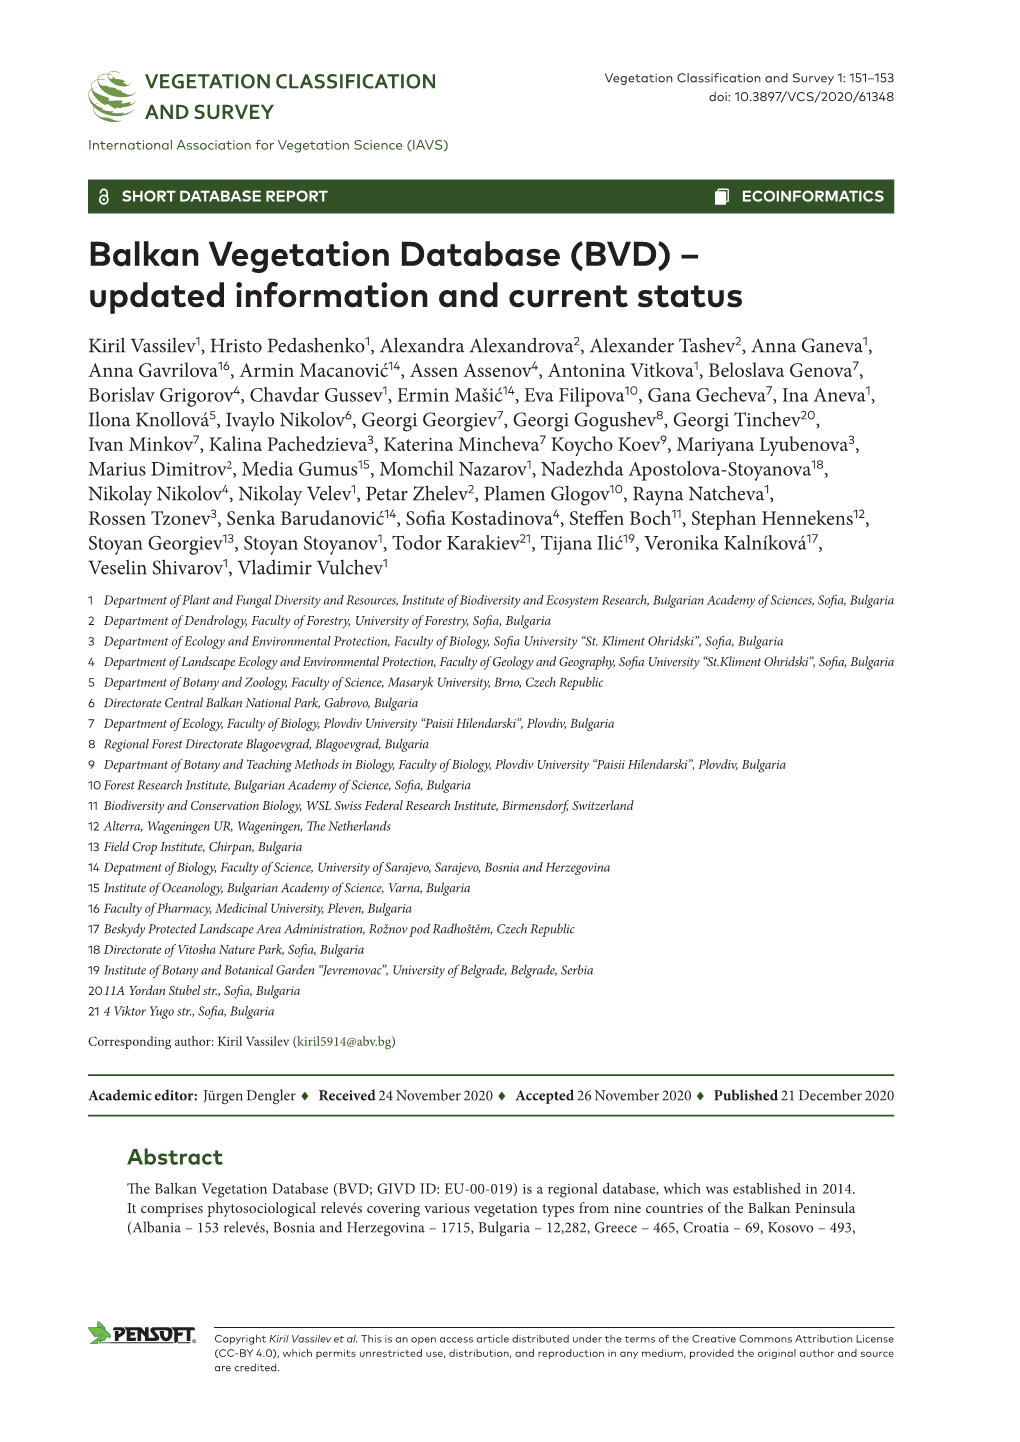 Balkan Vegetation Database (BVD) – Updated Information and Current Status